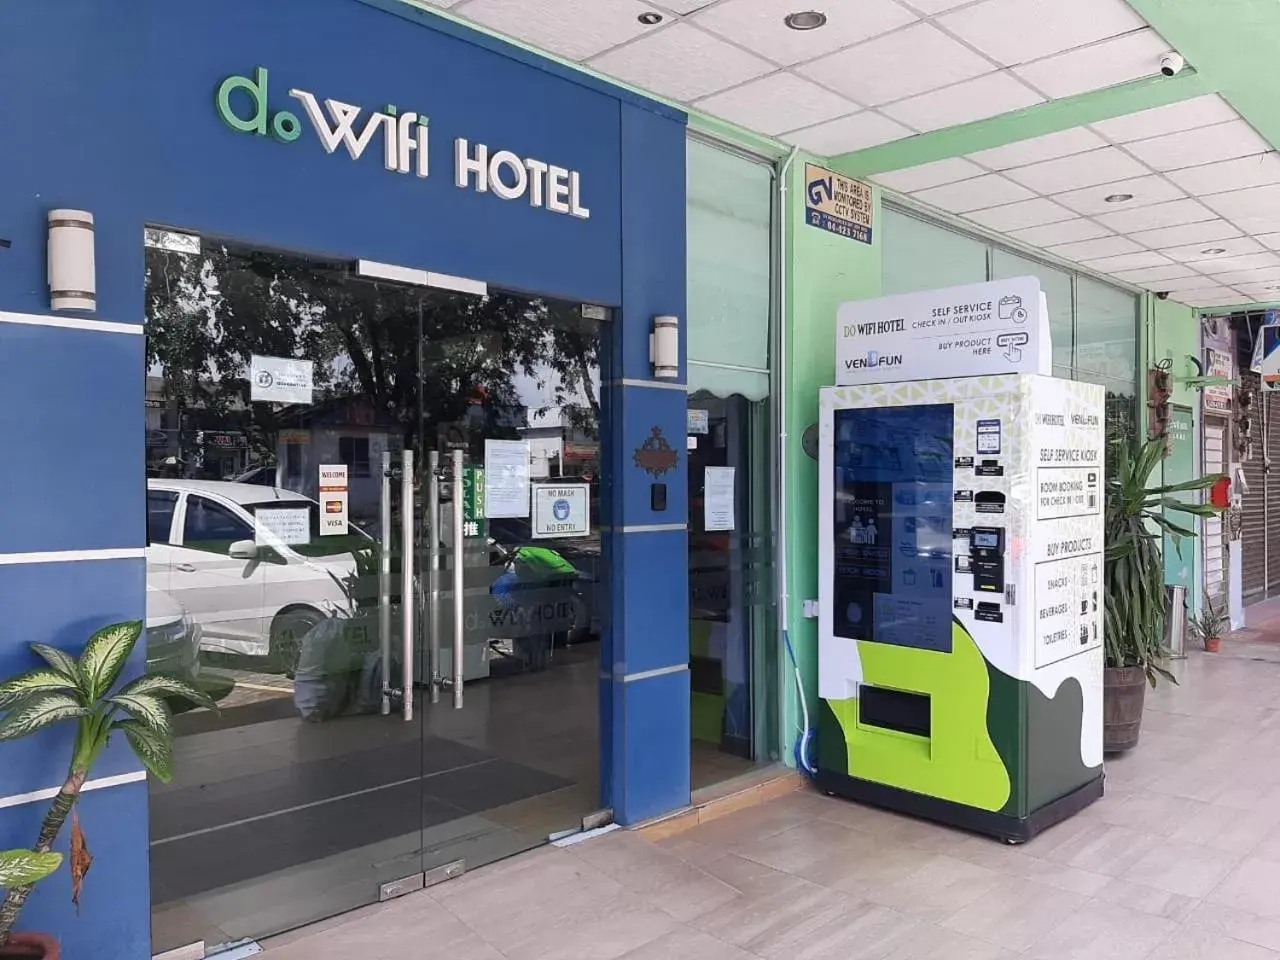 Dowifi Hotel -Self Service Kiosk